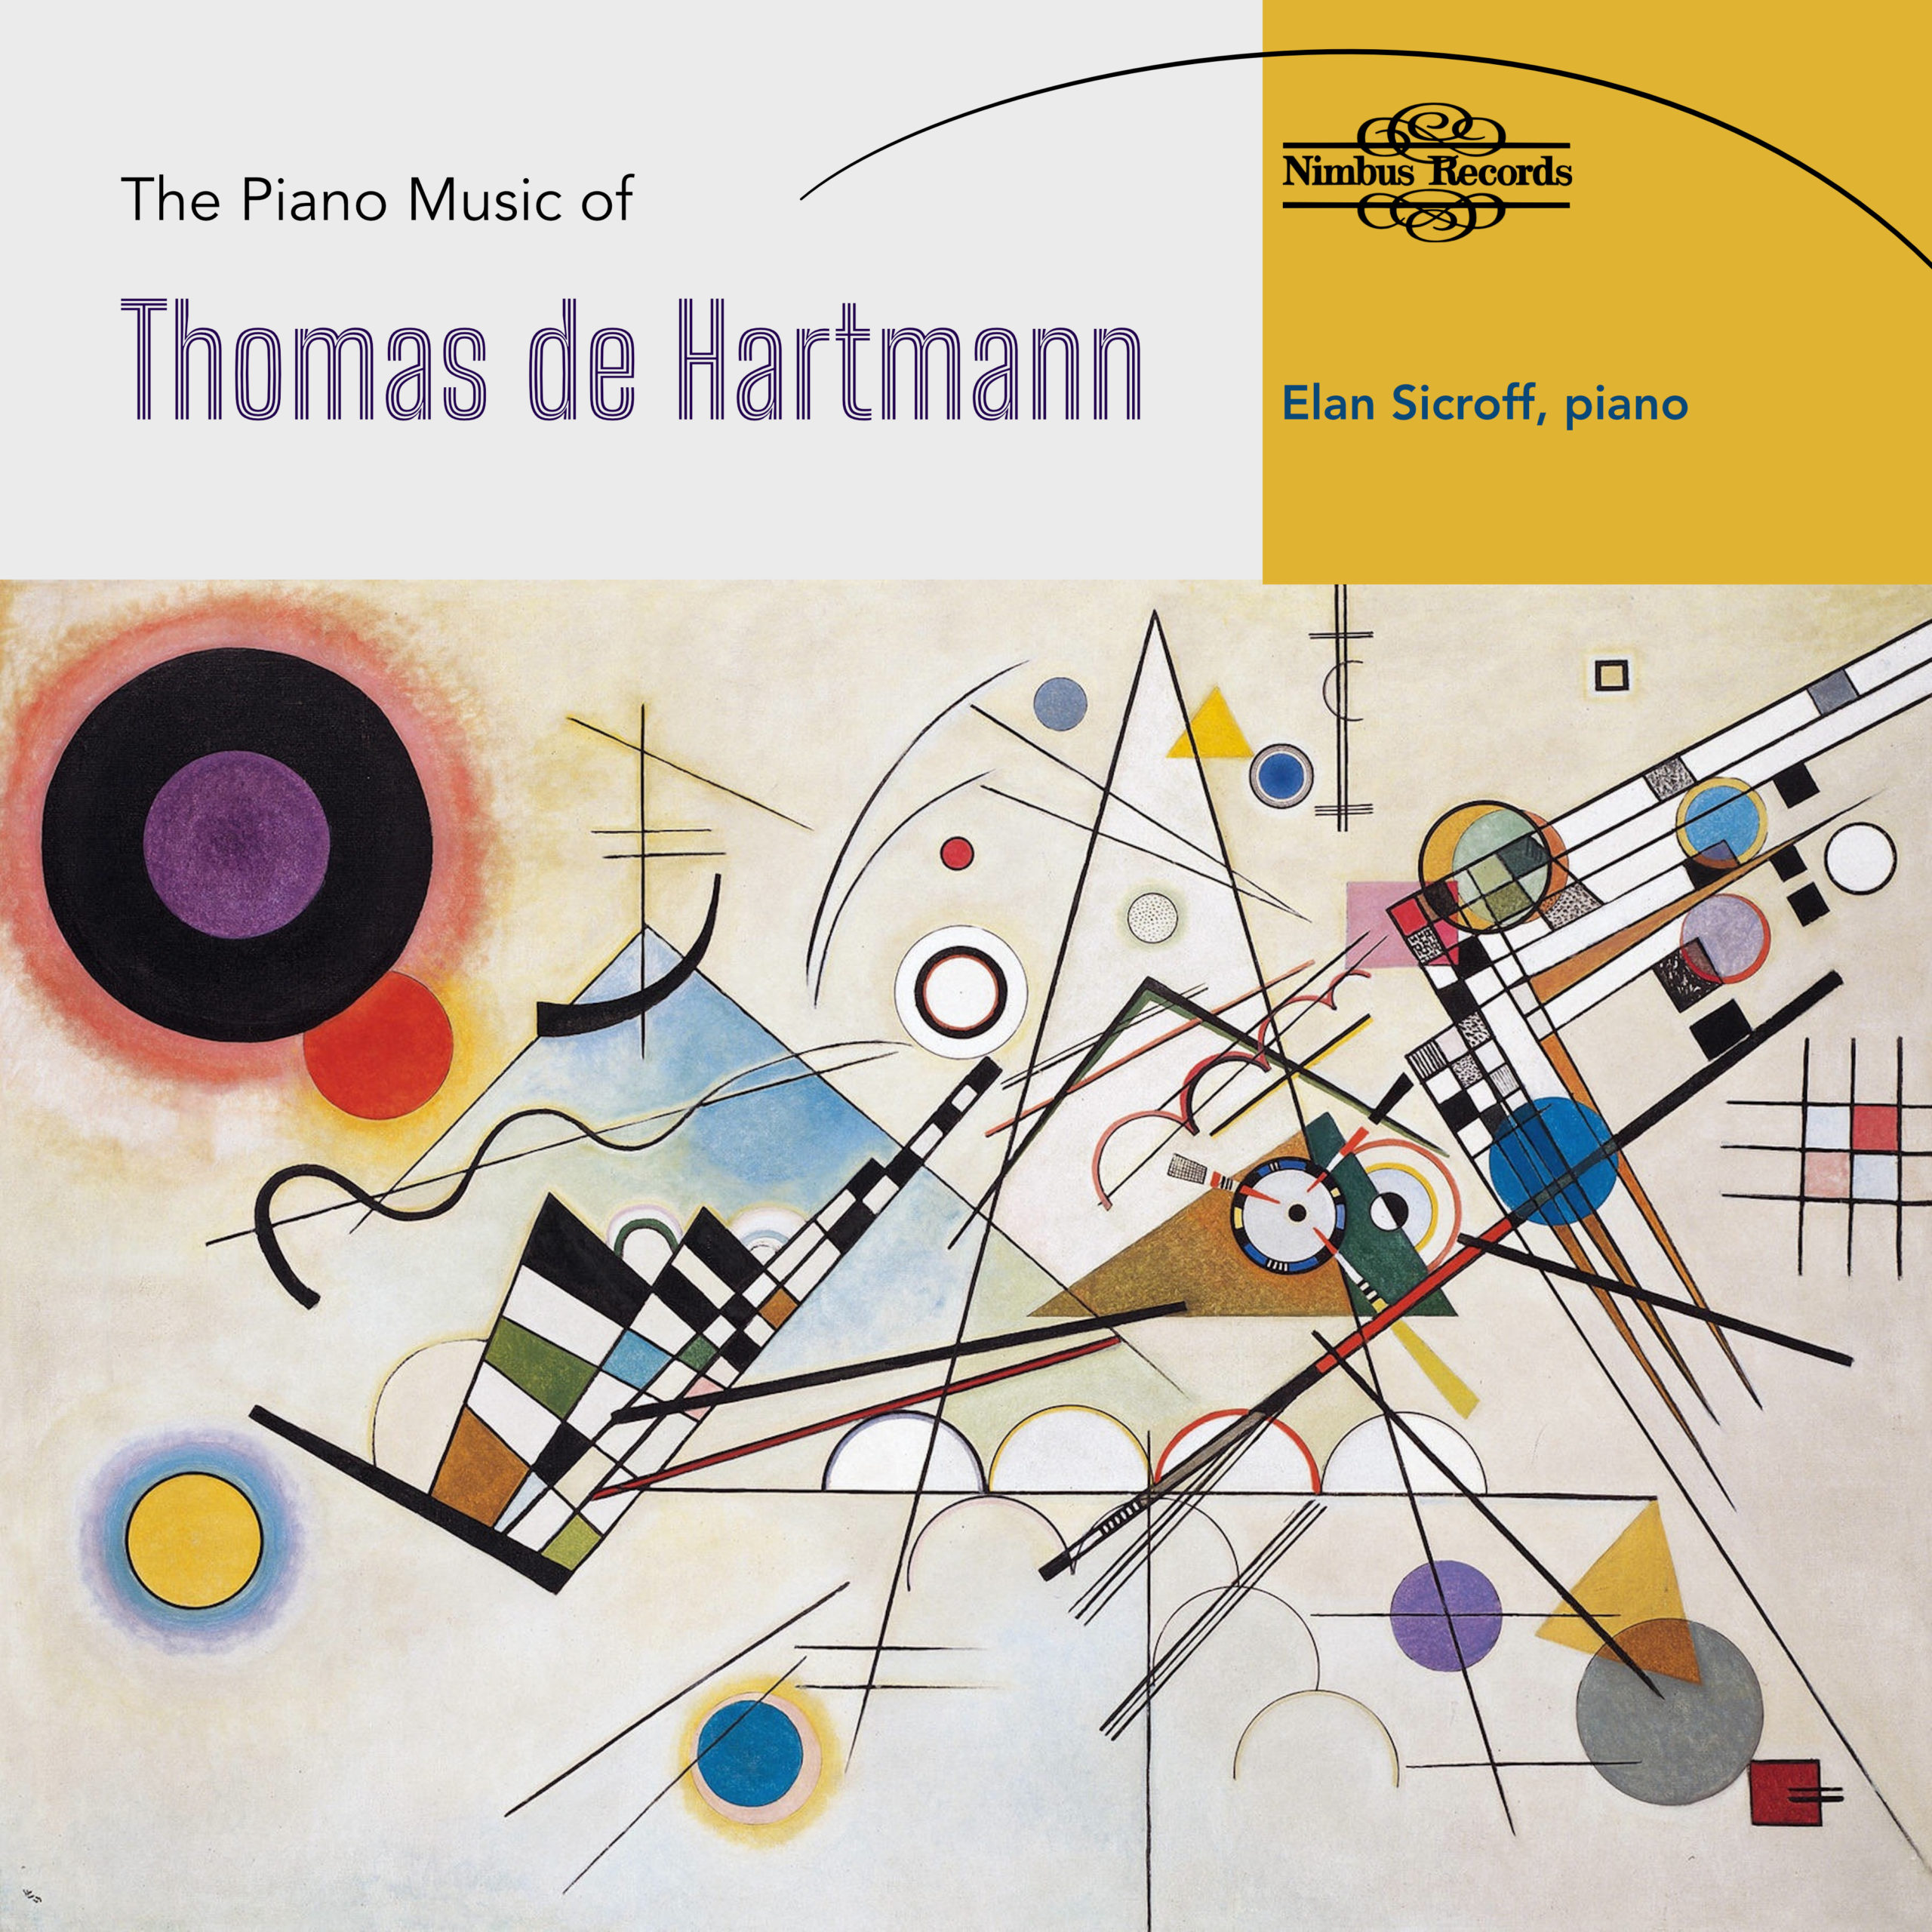 The Piano Music of Thomas de Hartmann